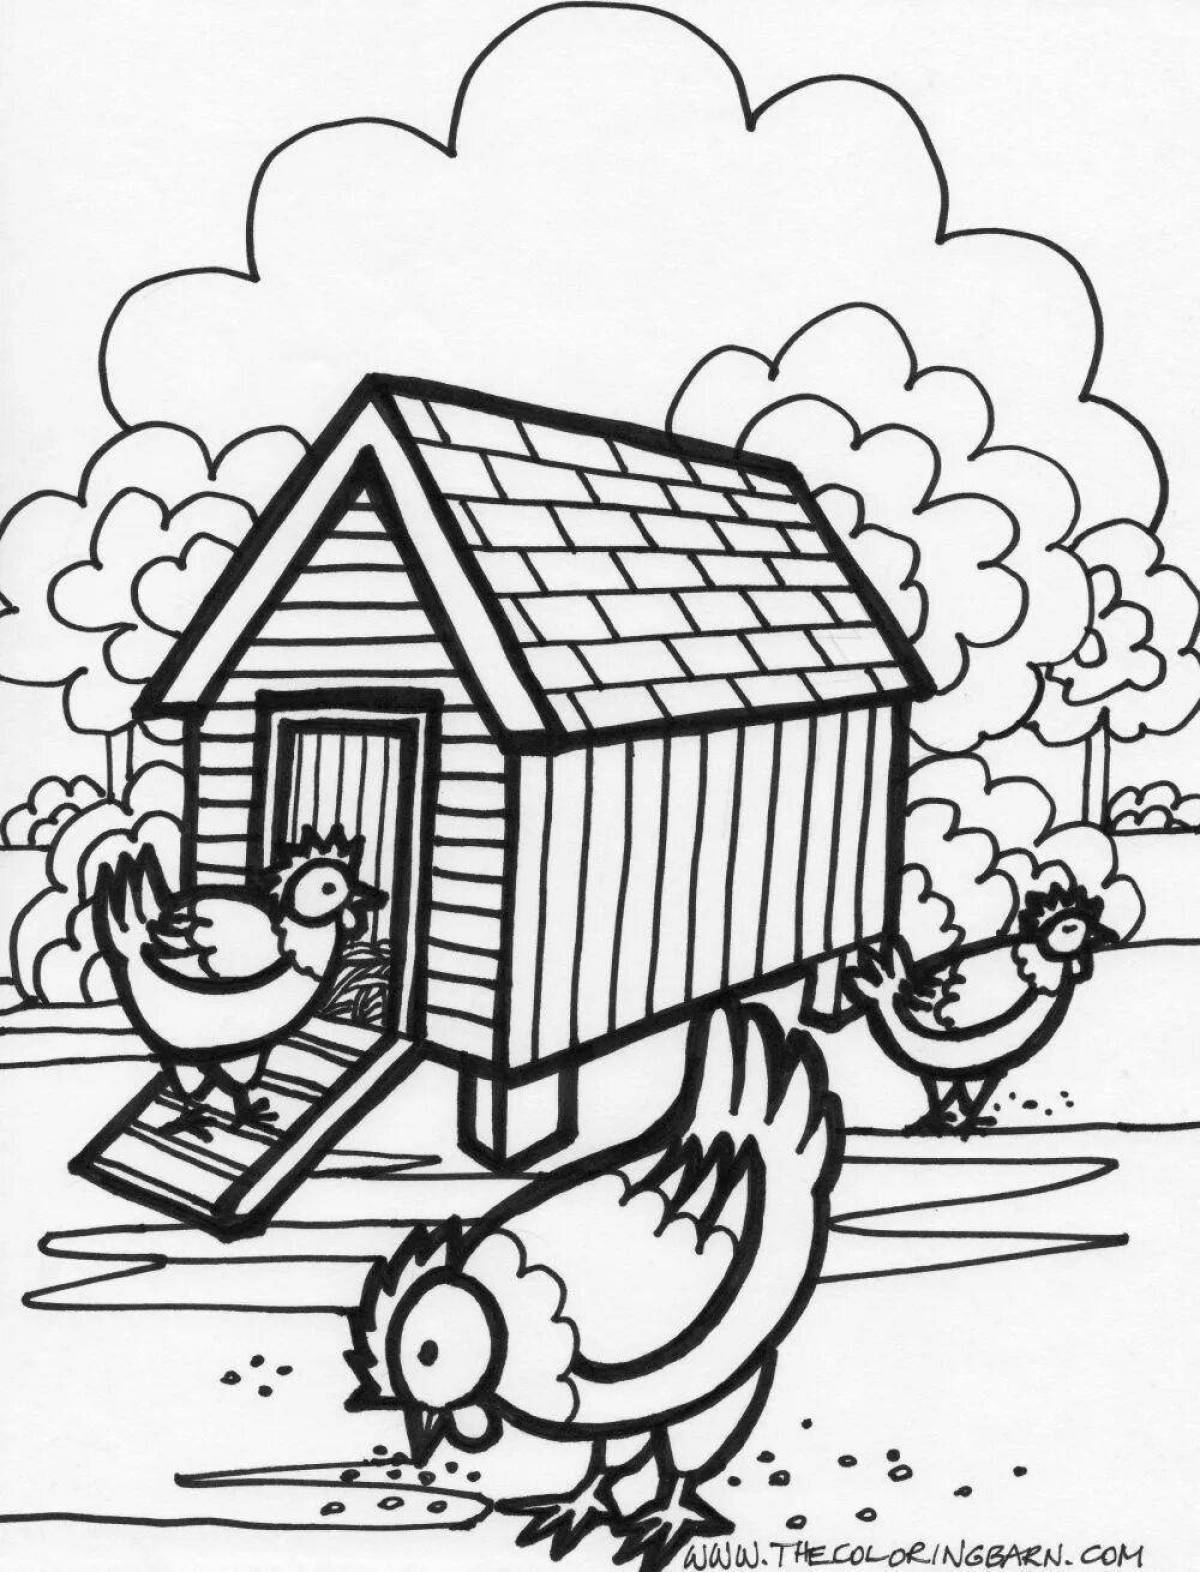 Crazy chicken coop coloring page